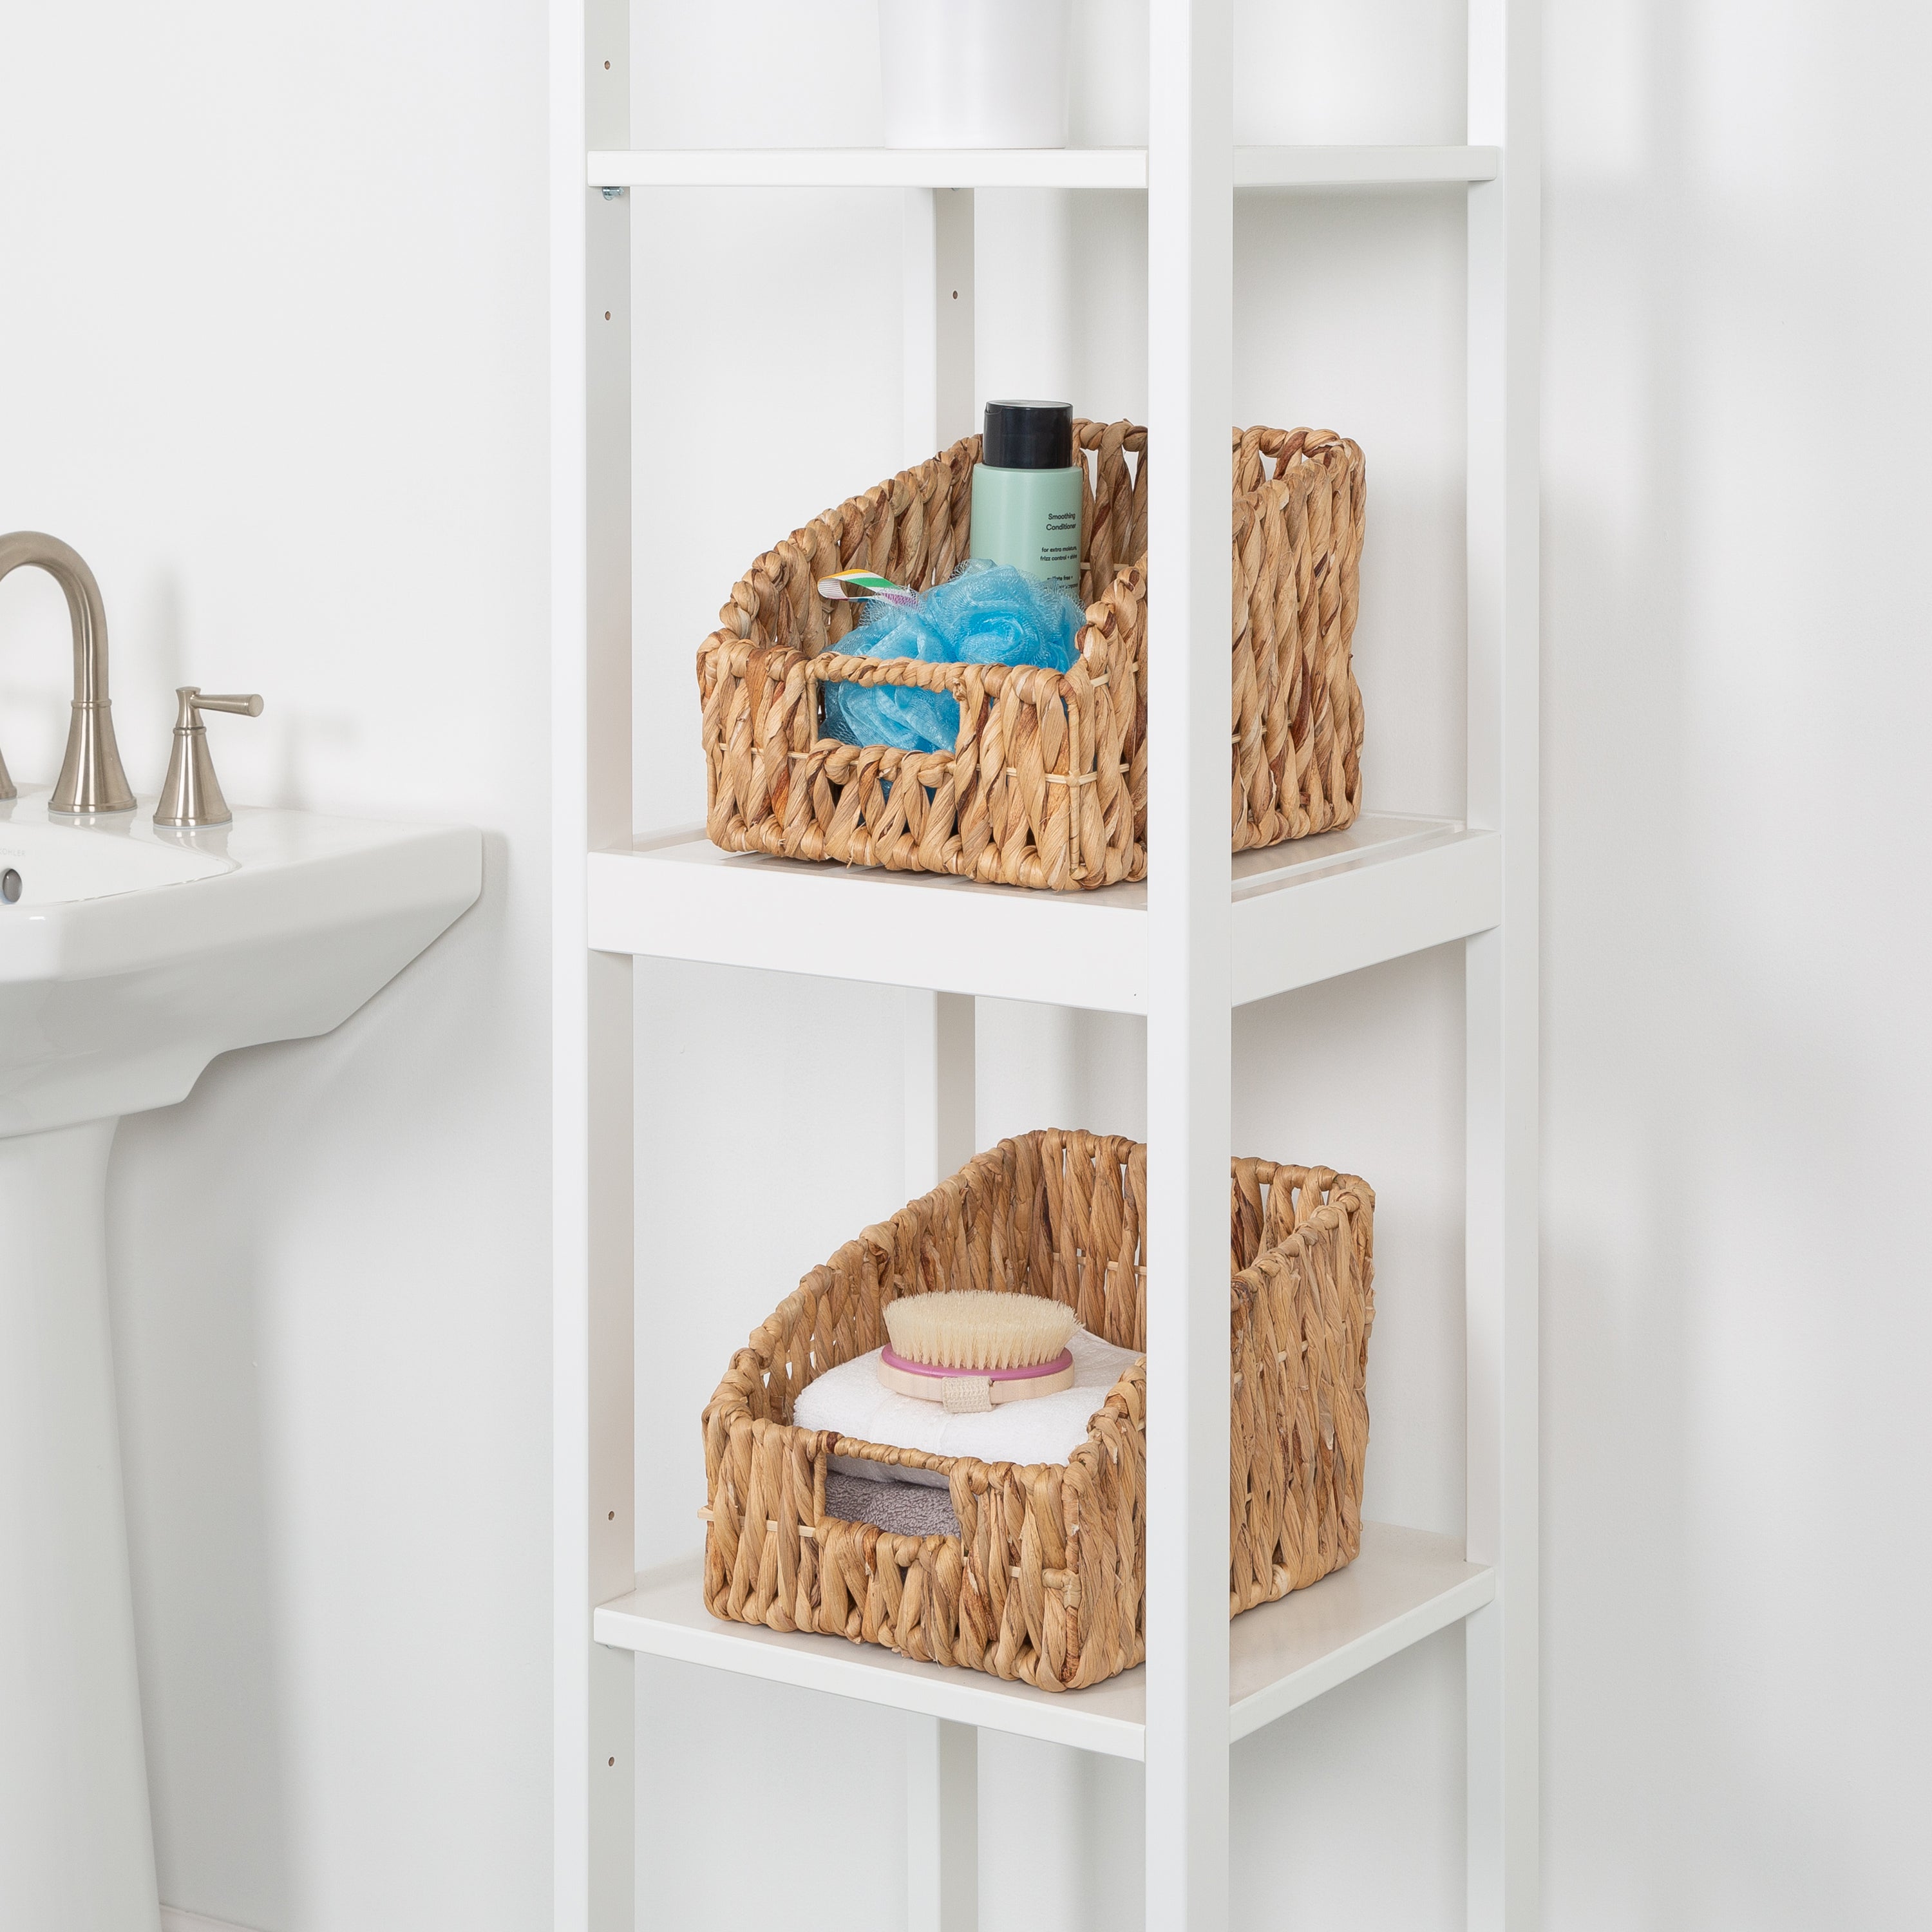 Bathroom Shelves With Baskets